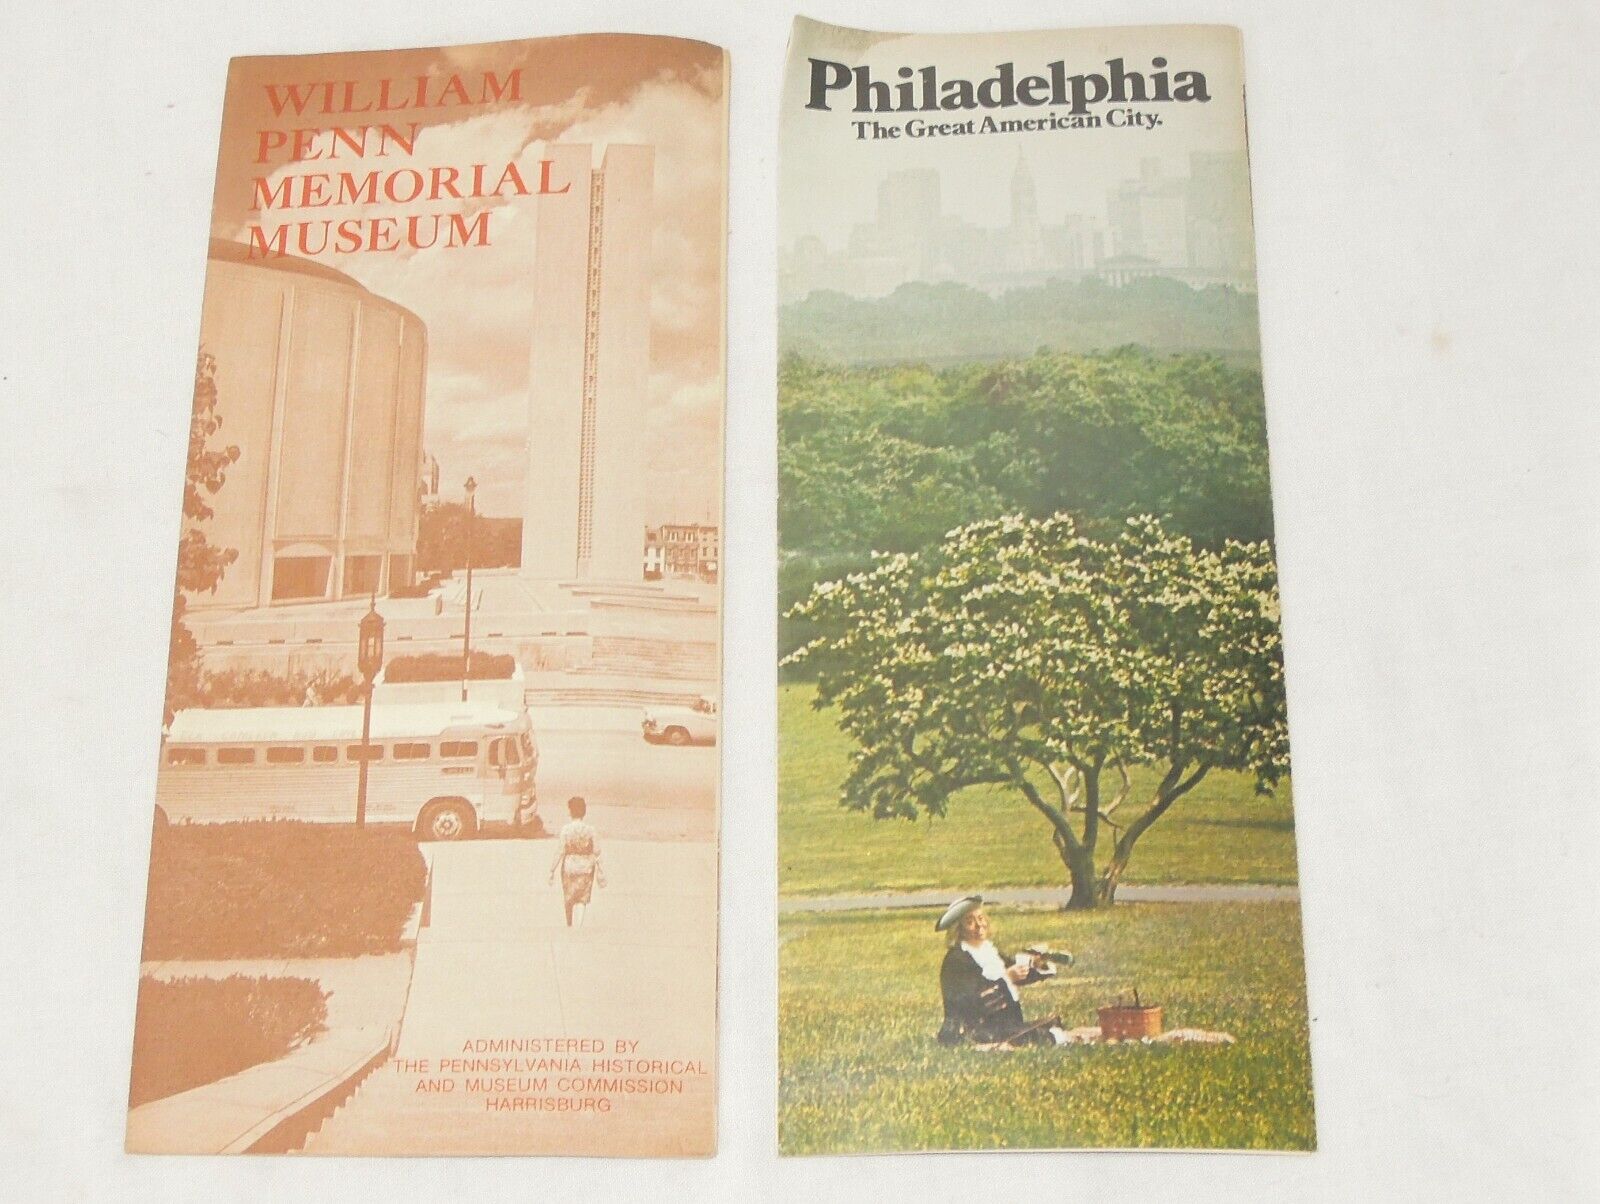 Vintage William Penn Memorial Museum and Philadelphia tourist brochures